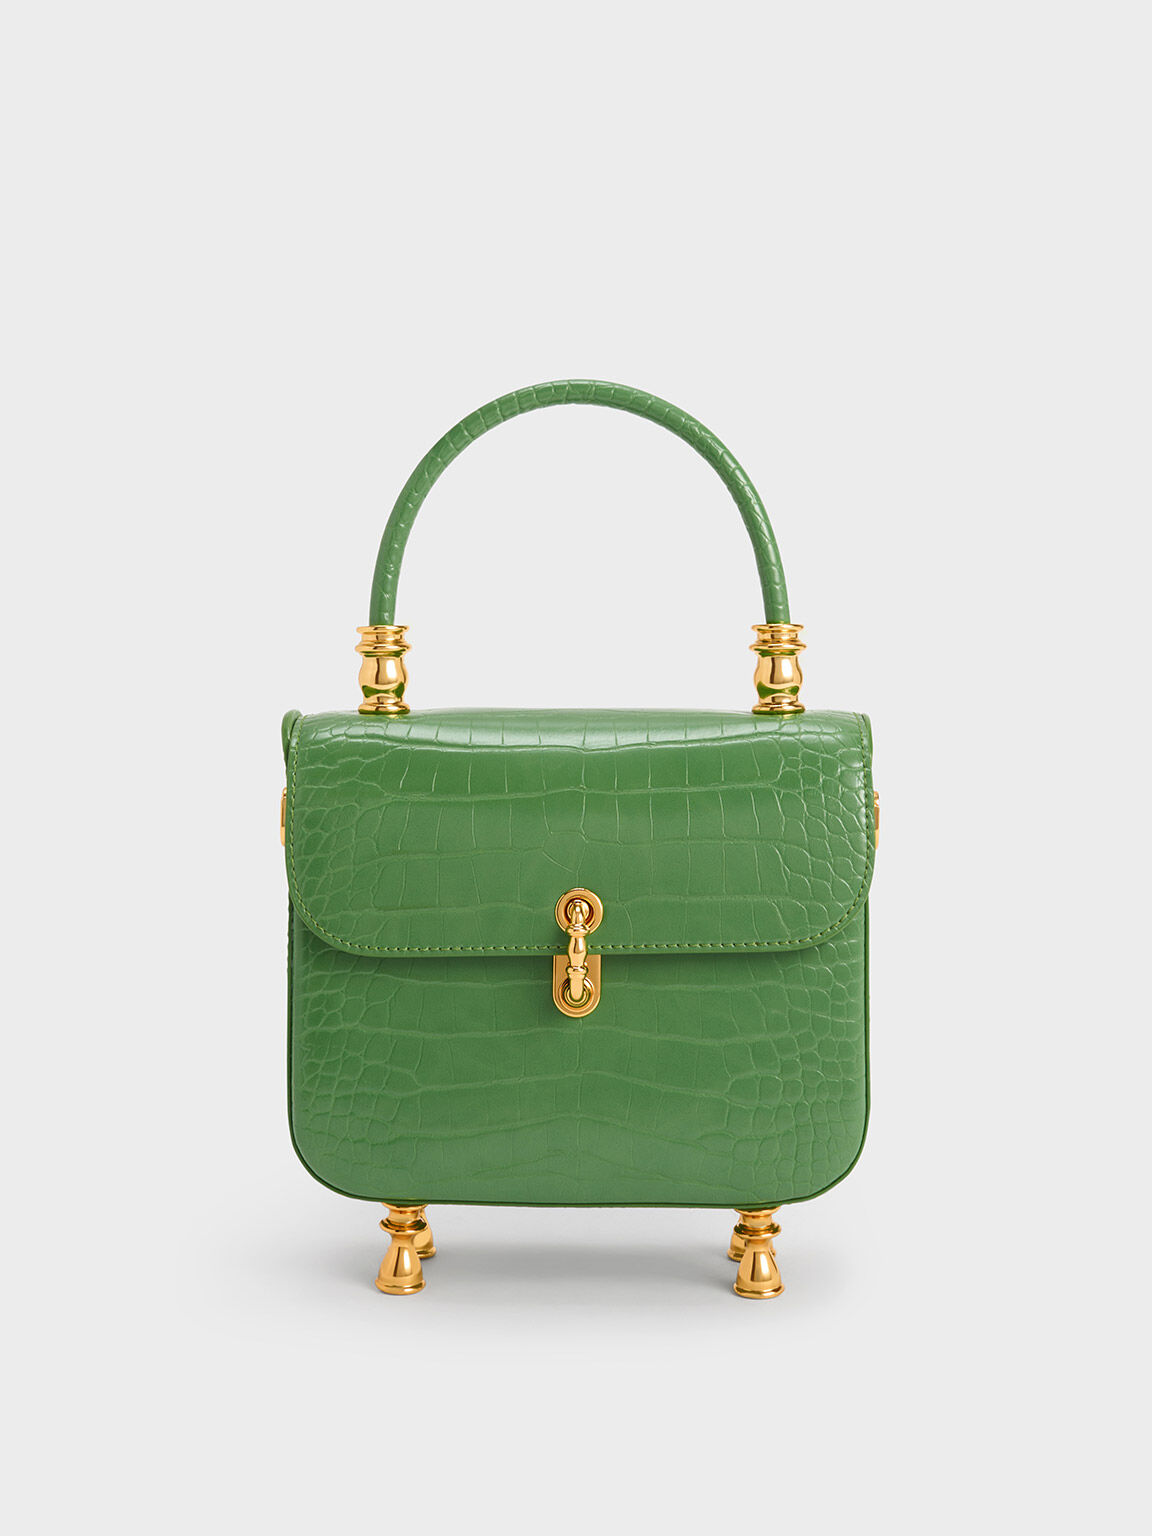 1 Green Elegant Fashion Vintage Crocodile Half Round Handbag